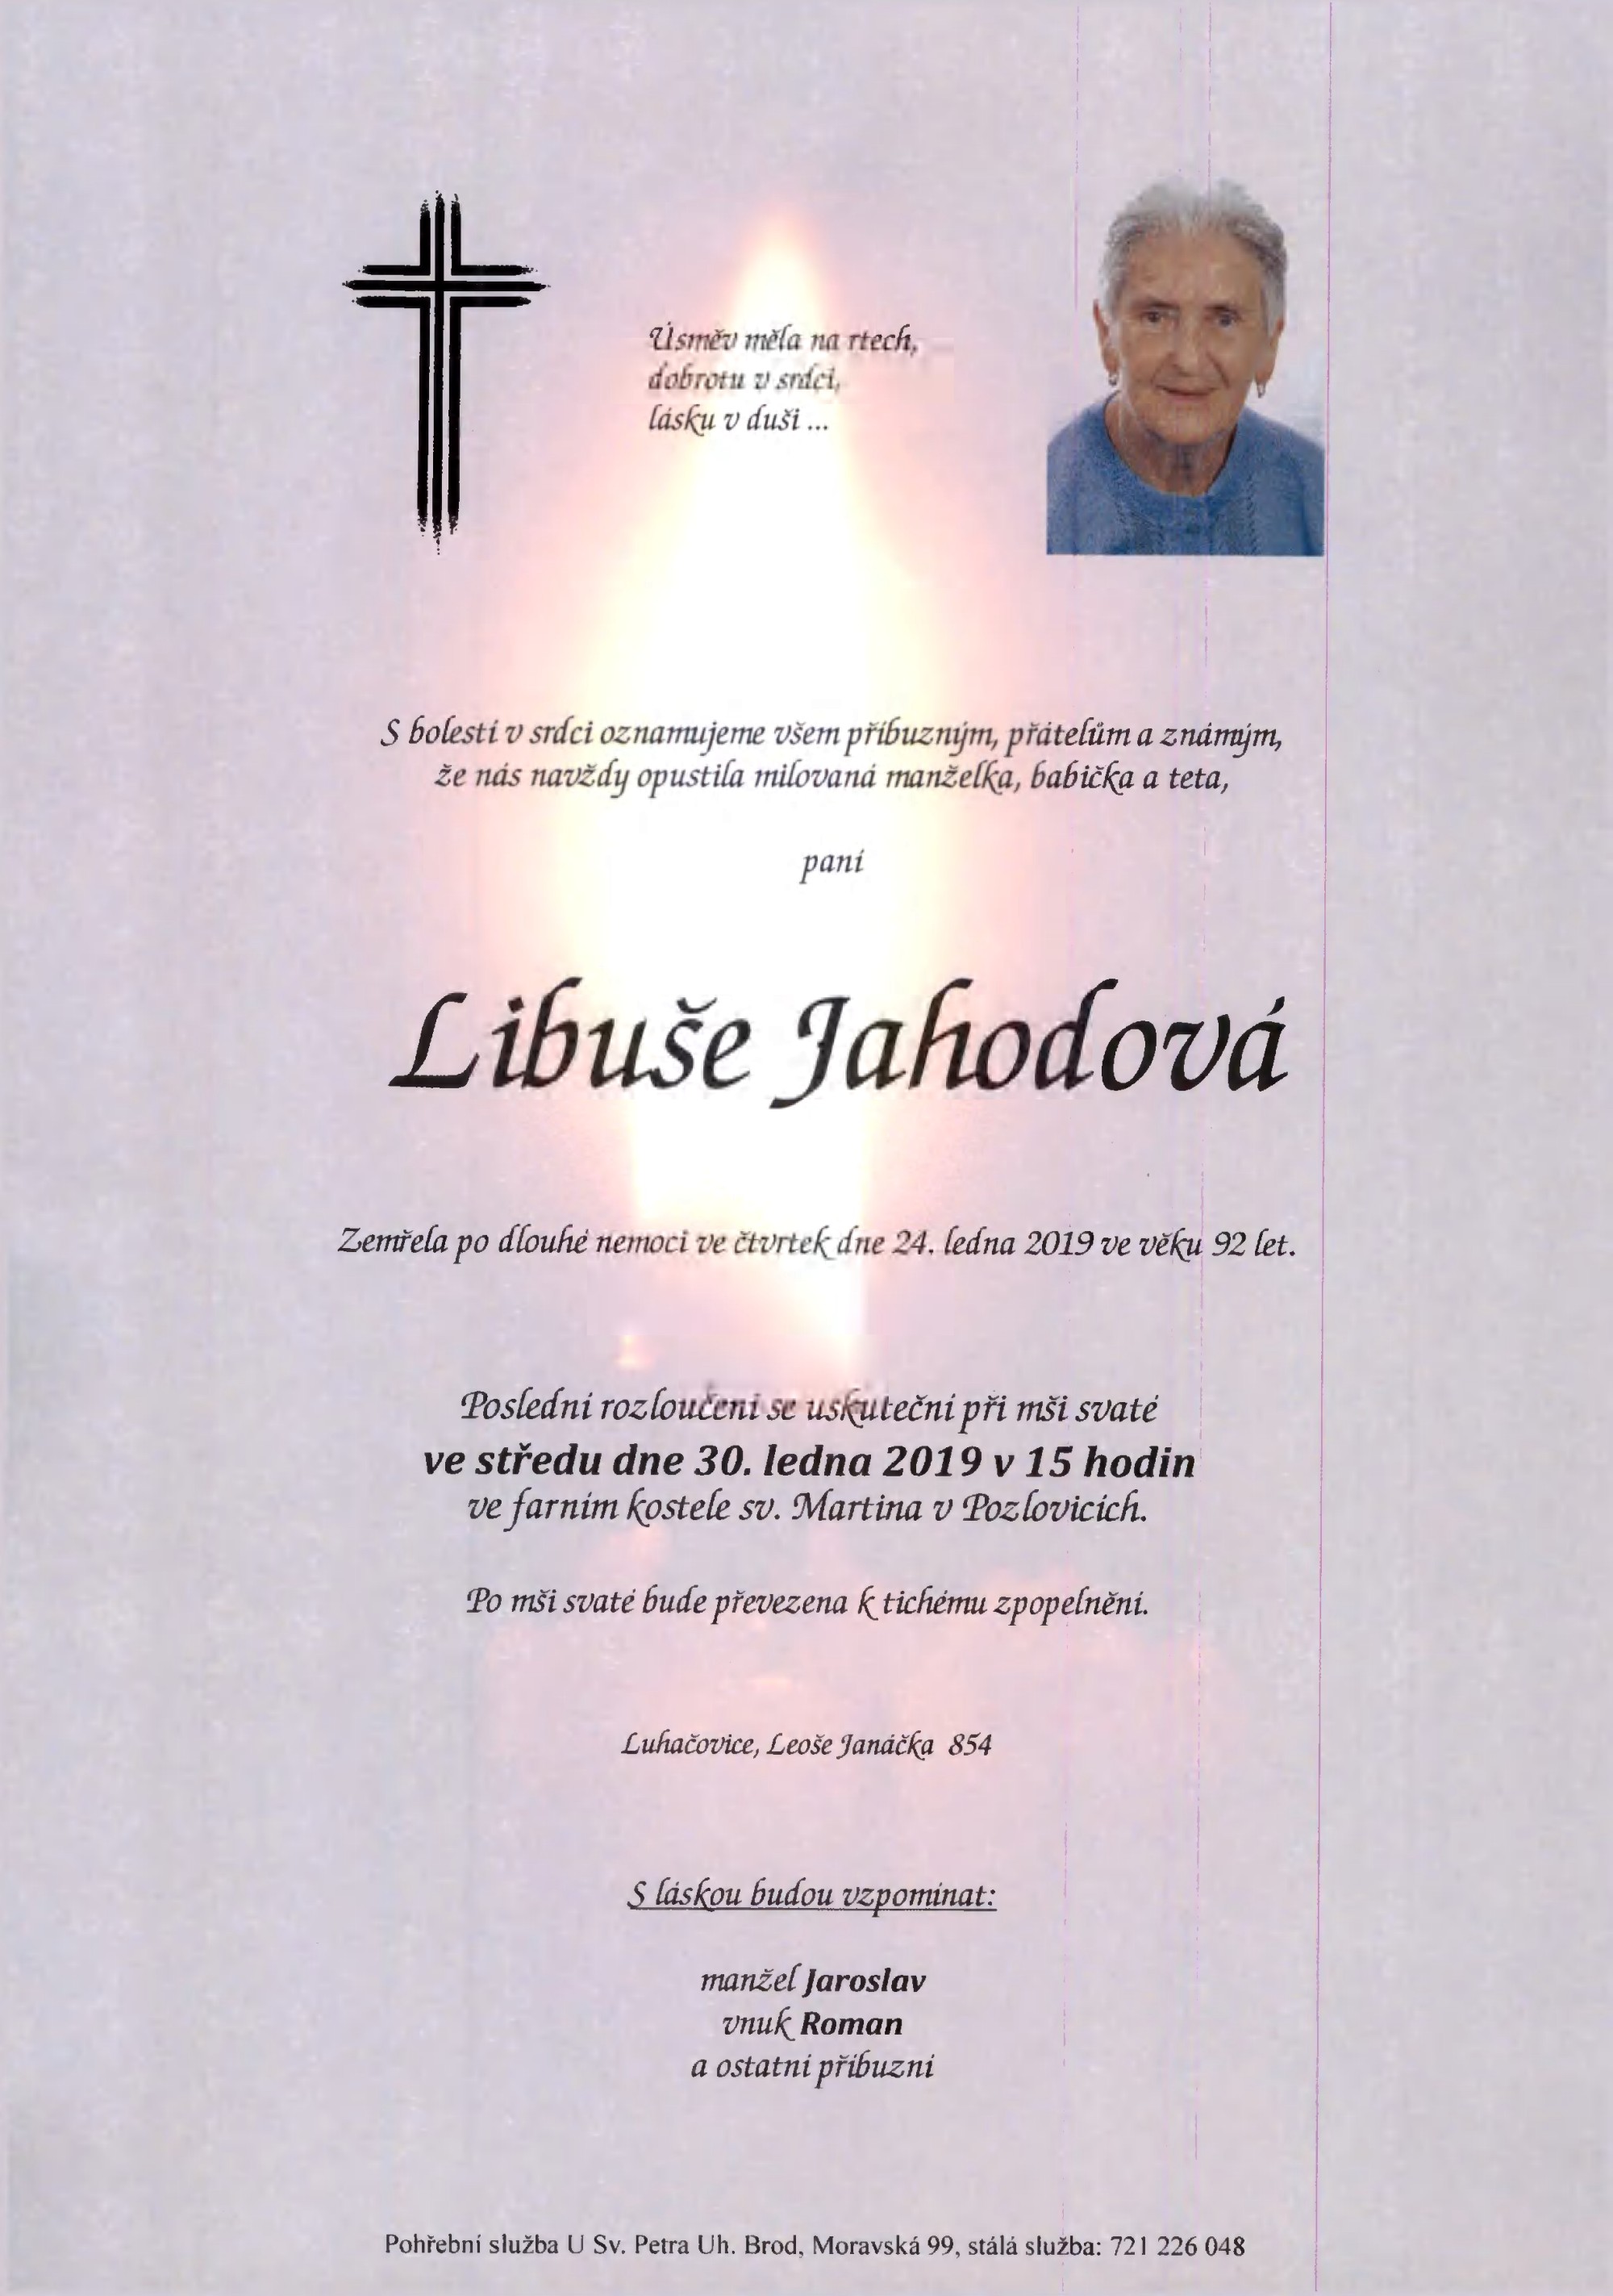 Libuše Jahodová